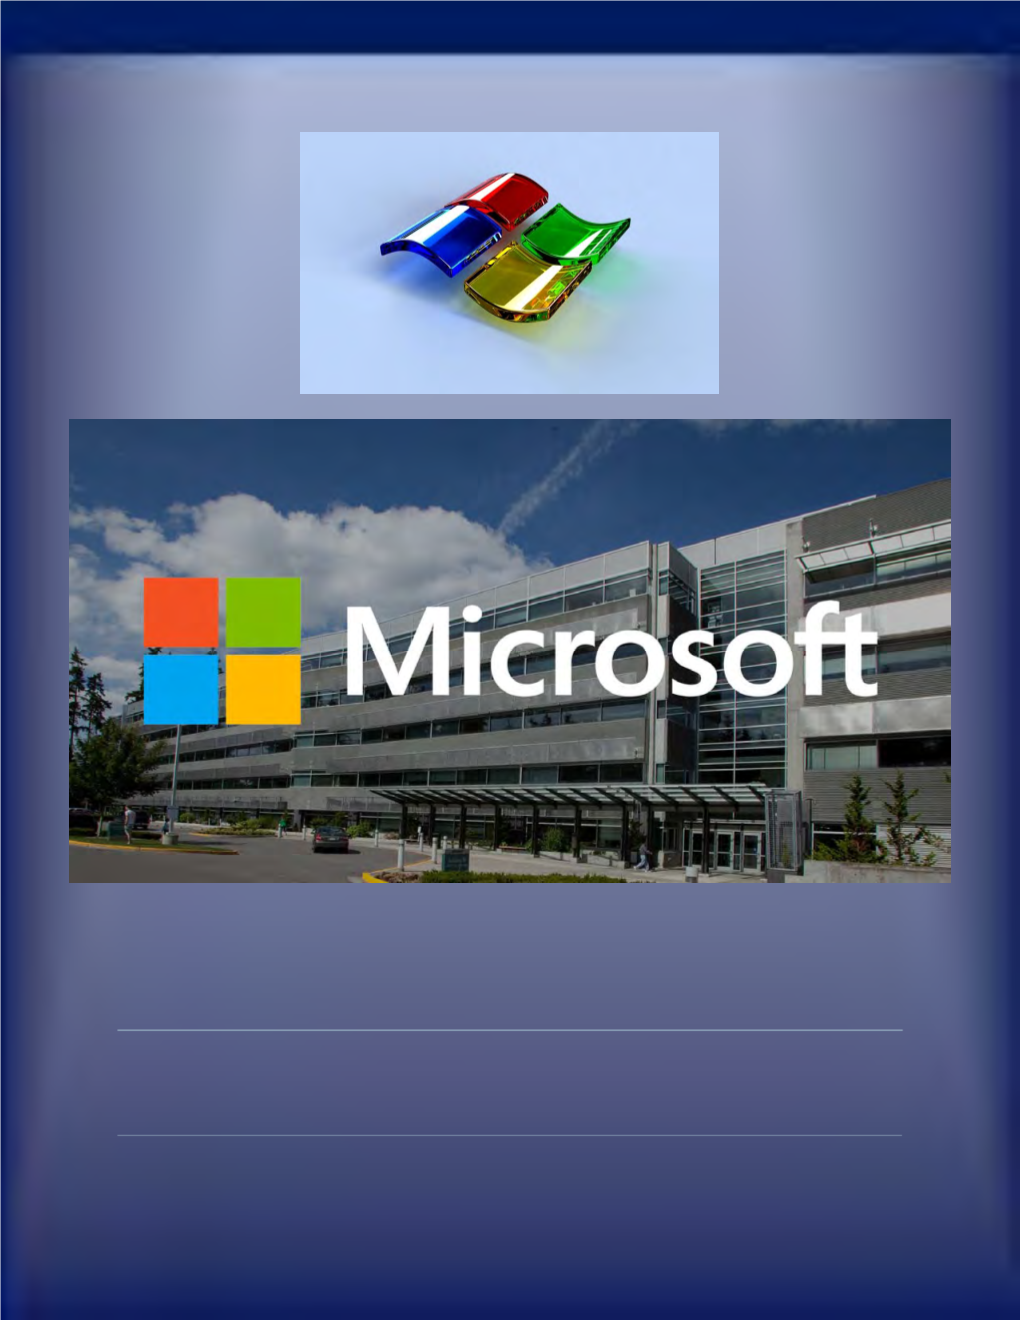 1 Microsoft Student Programs| Microsoft